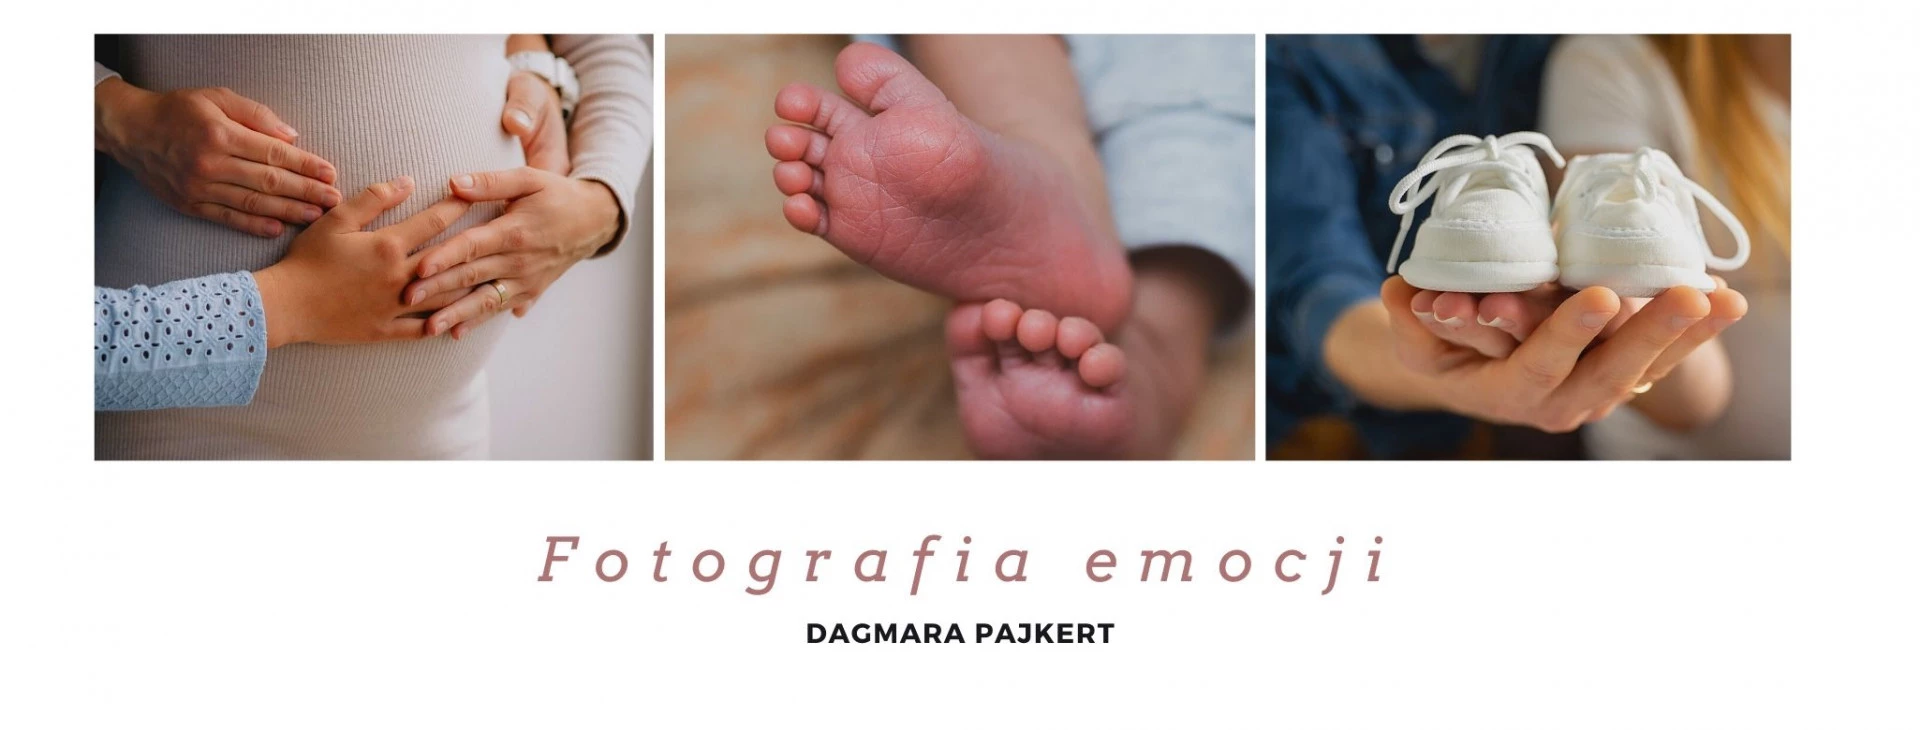 portfolio zdjecia znany fotograf fotografia-dagmara-pajkert